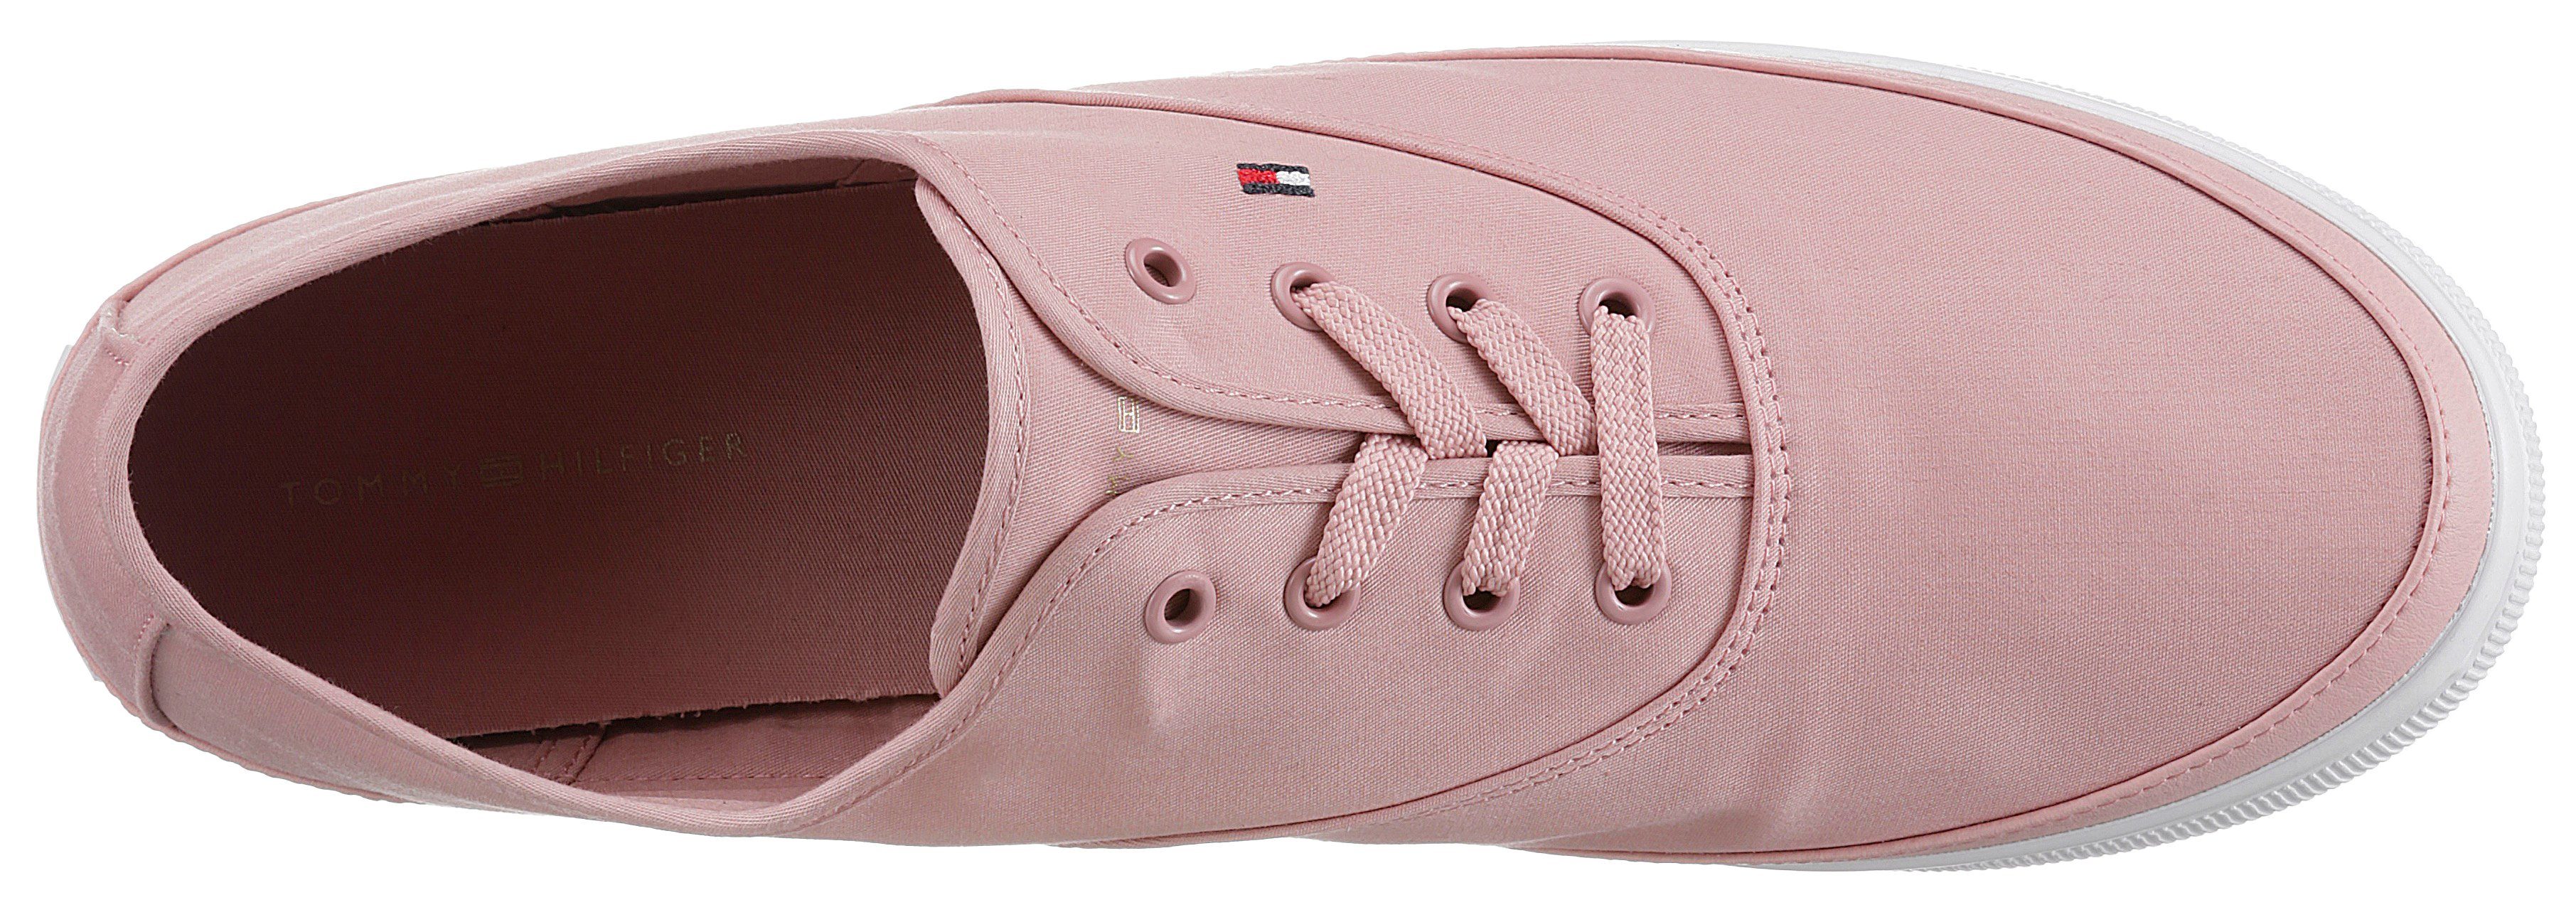 KESHA LACE ESSENTIAL Tommy Hilfiger Logoflagge, Sneaker SNEAKER rosa mit E-Weite gestickter